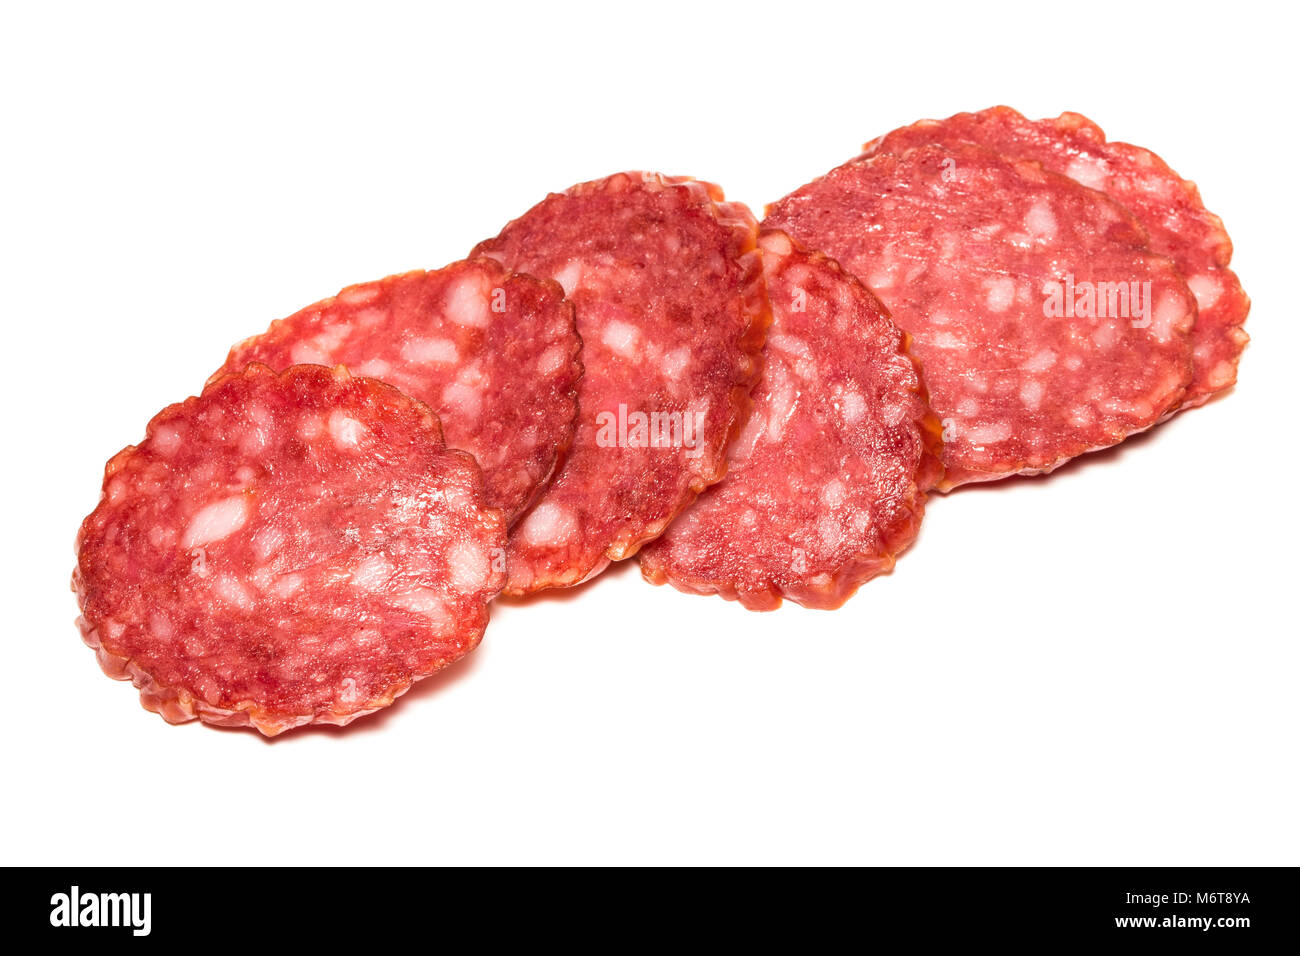 Salami smoked sausage isolated on white background cutout. Stock Photo